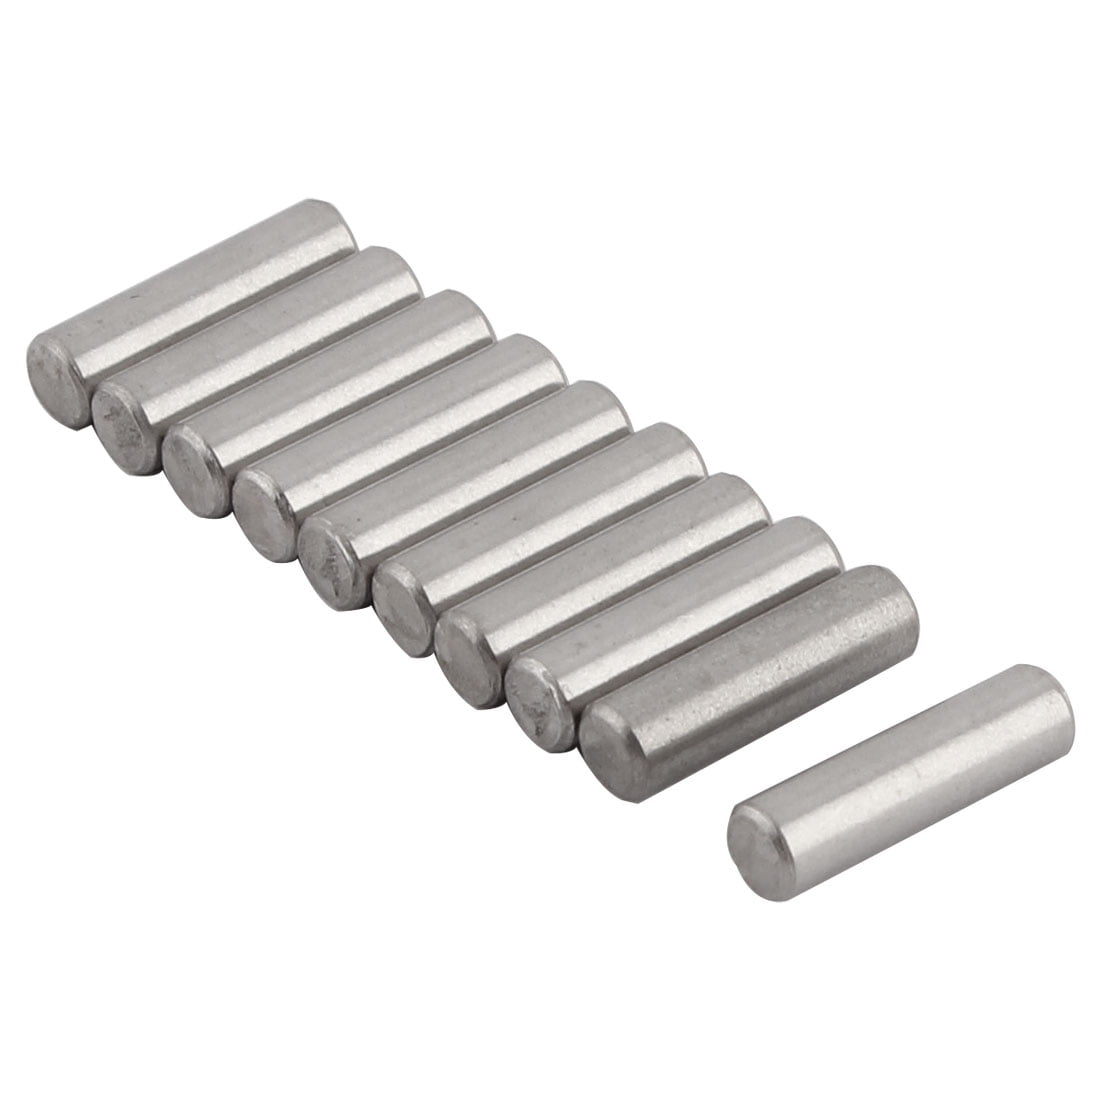 100 Pcs Stainless Steel 2.5mm x 15.8mm Dowel Pins Fasten Elements 